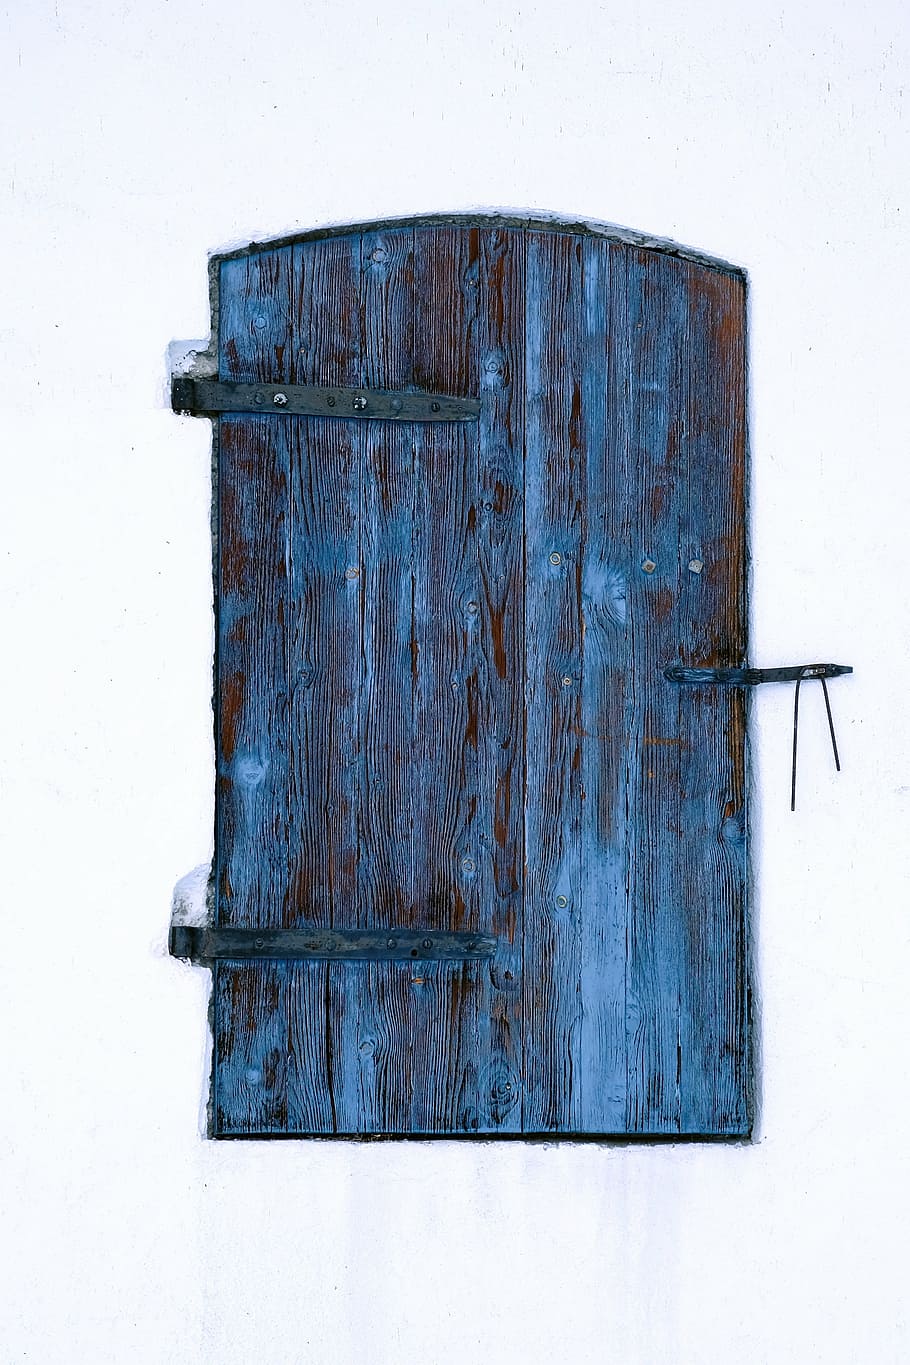 puerta de madera azul, puerta, blanco, azul, pared, cerradura, madera, pintura, arte, estética